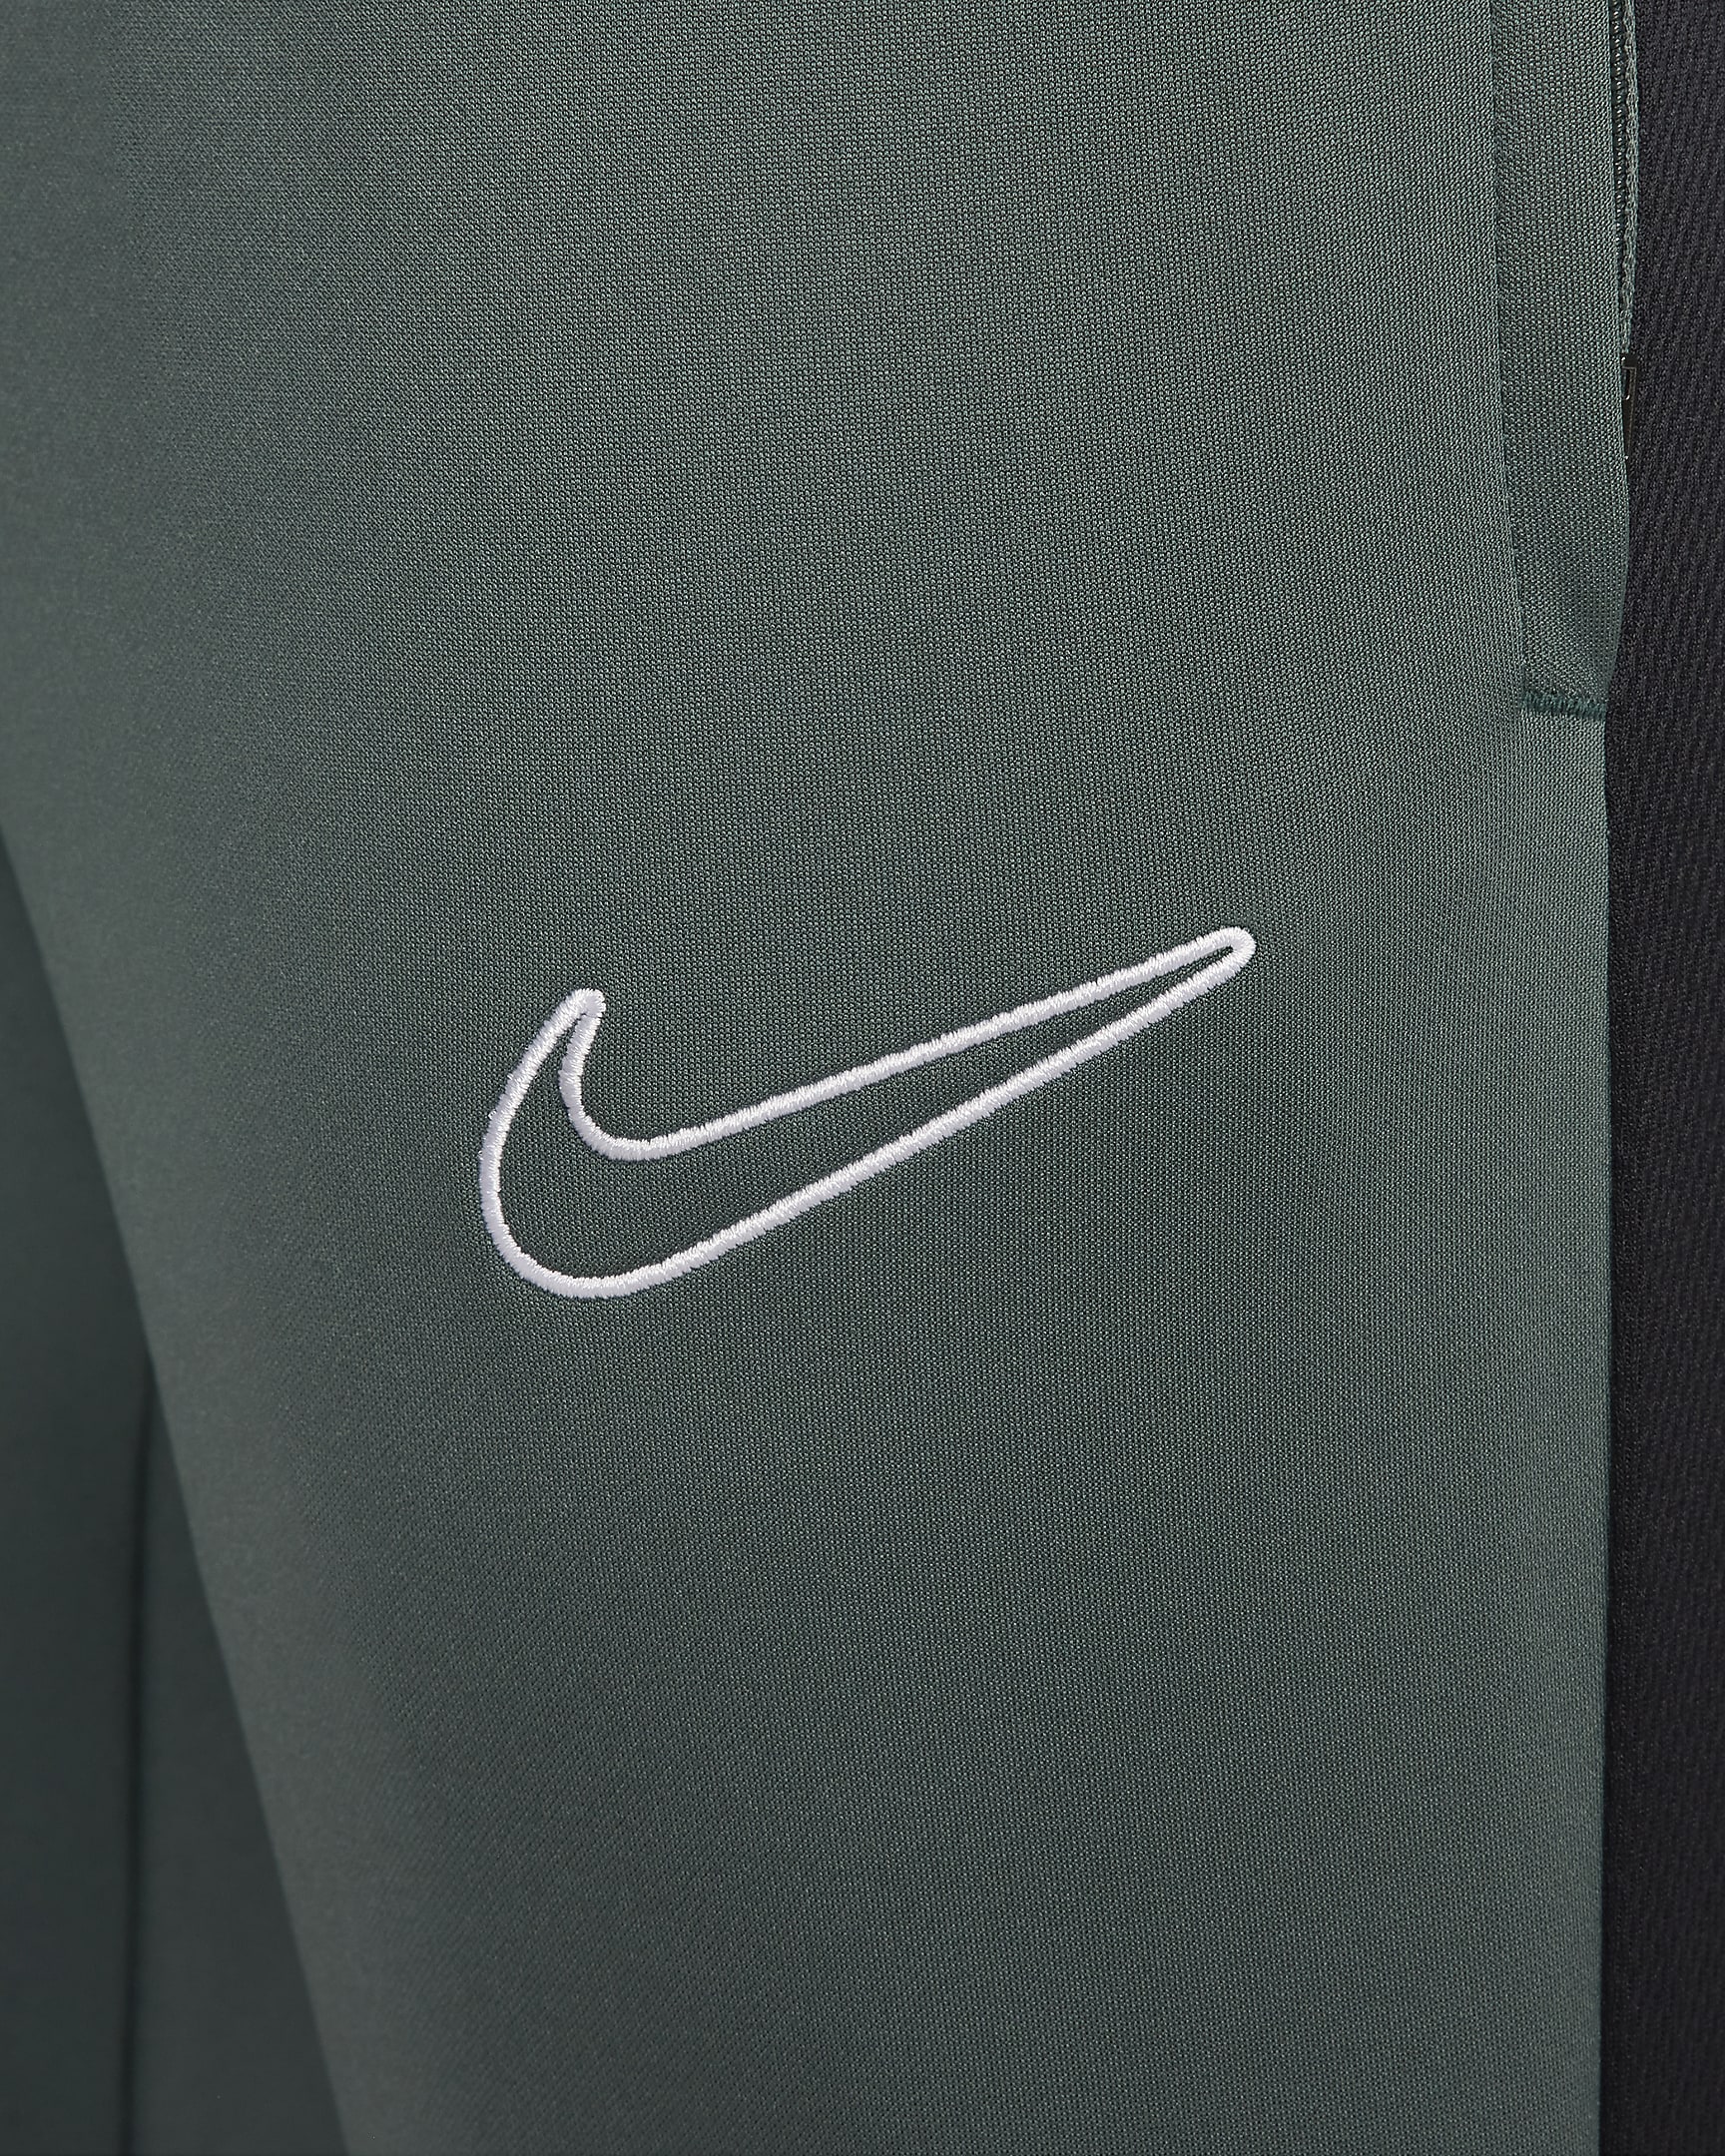 Nike Dri-FIT Academy Men's Dri-FIT Football Pants - Vintage Green/Black/Black/White